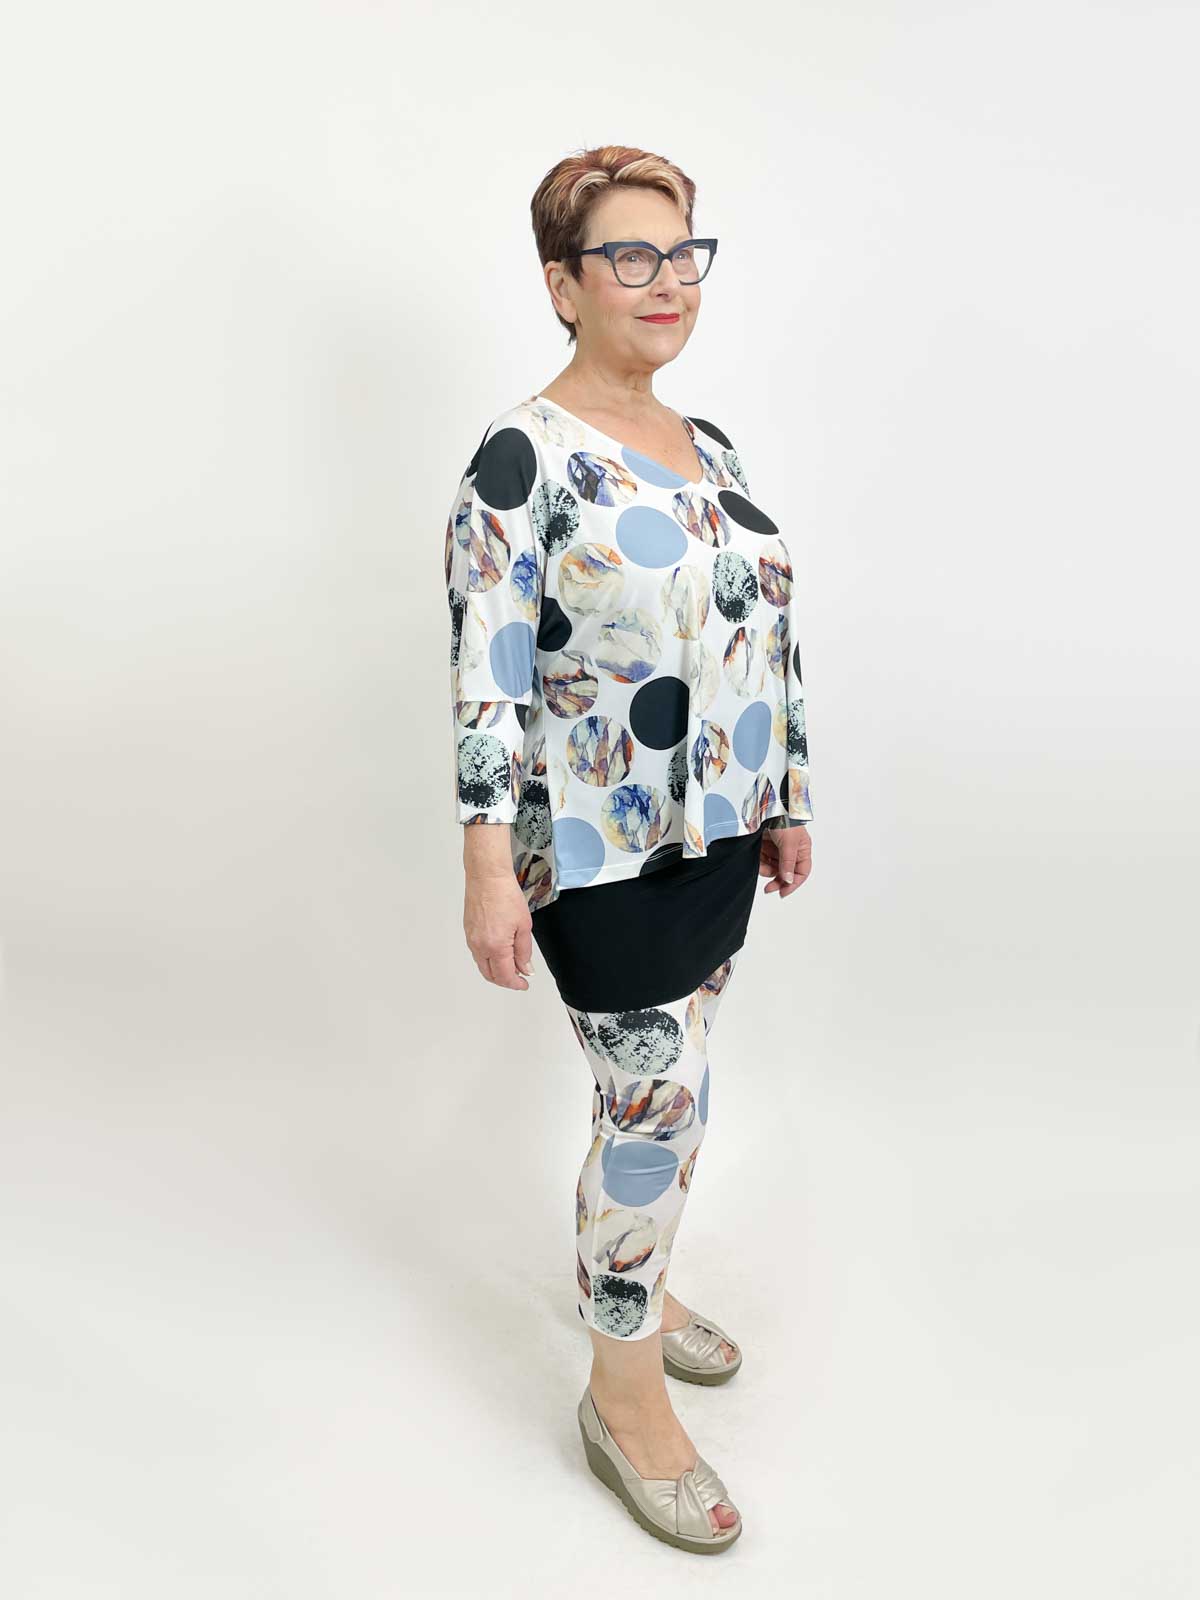 Kozan Donna Legging, Jupiter Vogue - Statement Boutique